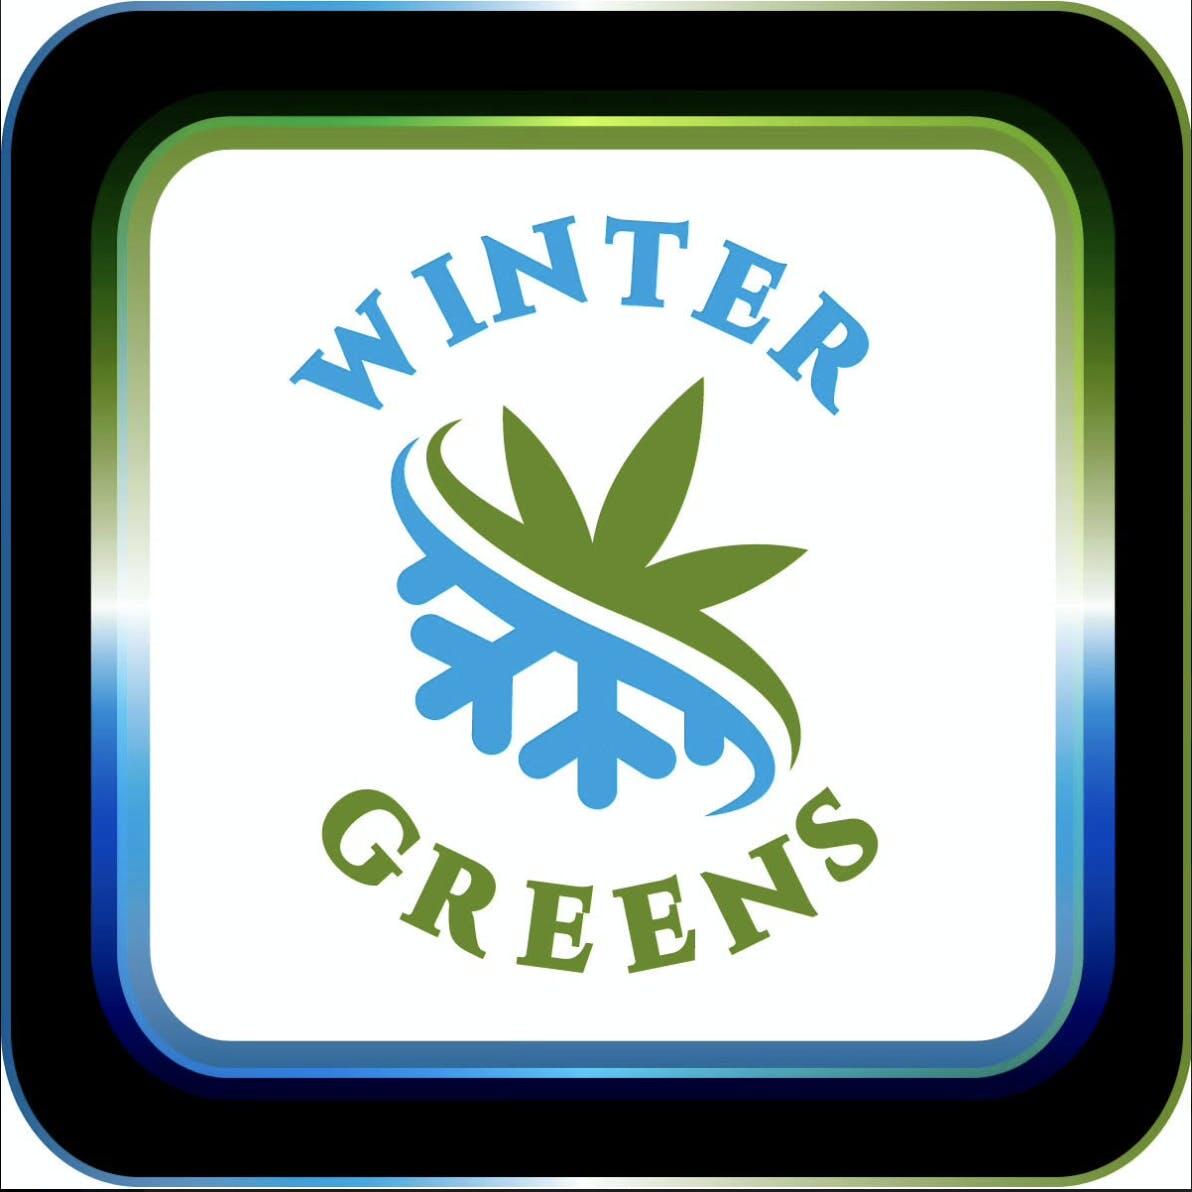 Winter Greens Delivery - Costa Mesa